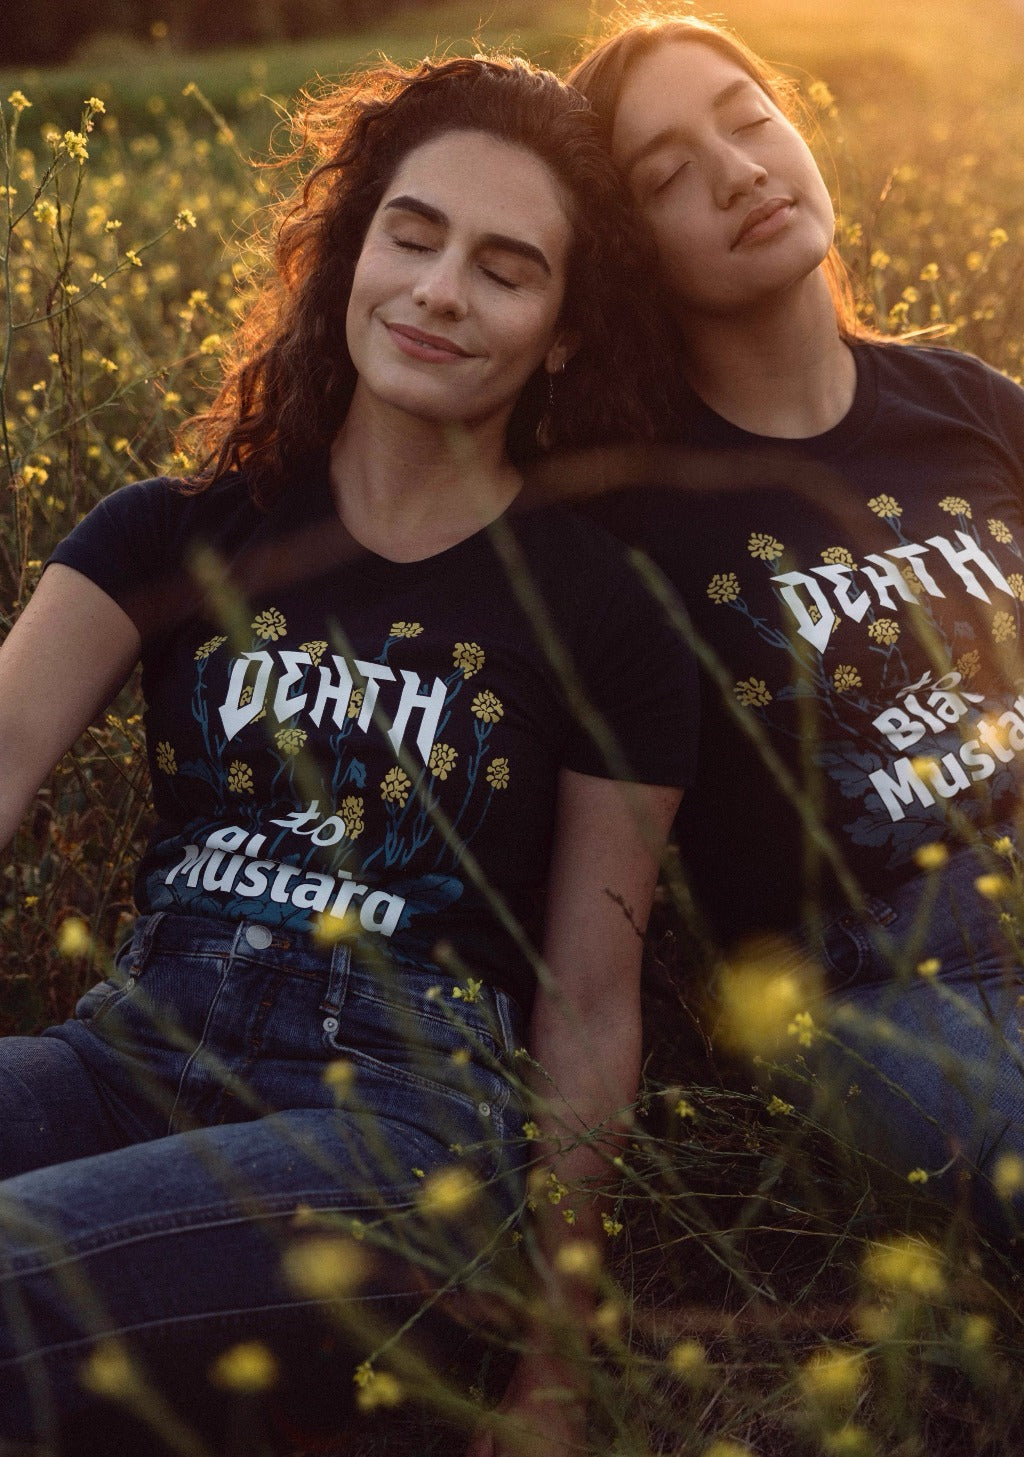 Death to Black Mustard T-Shirt